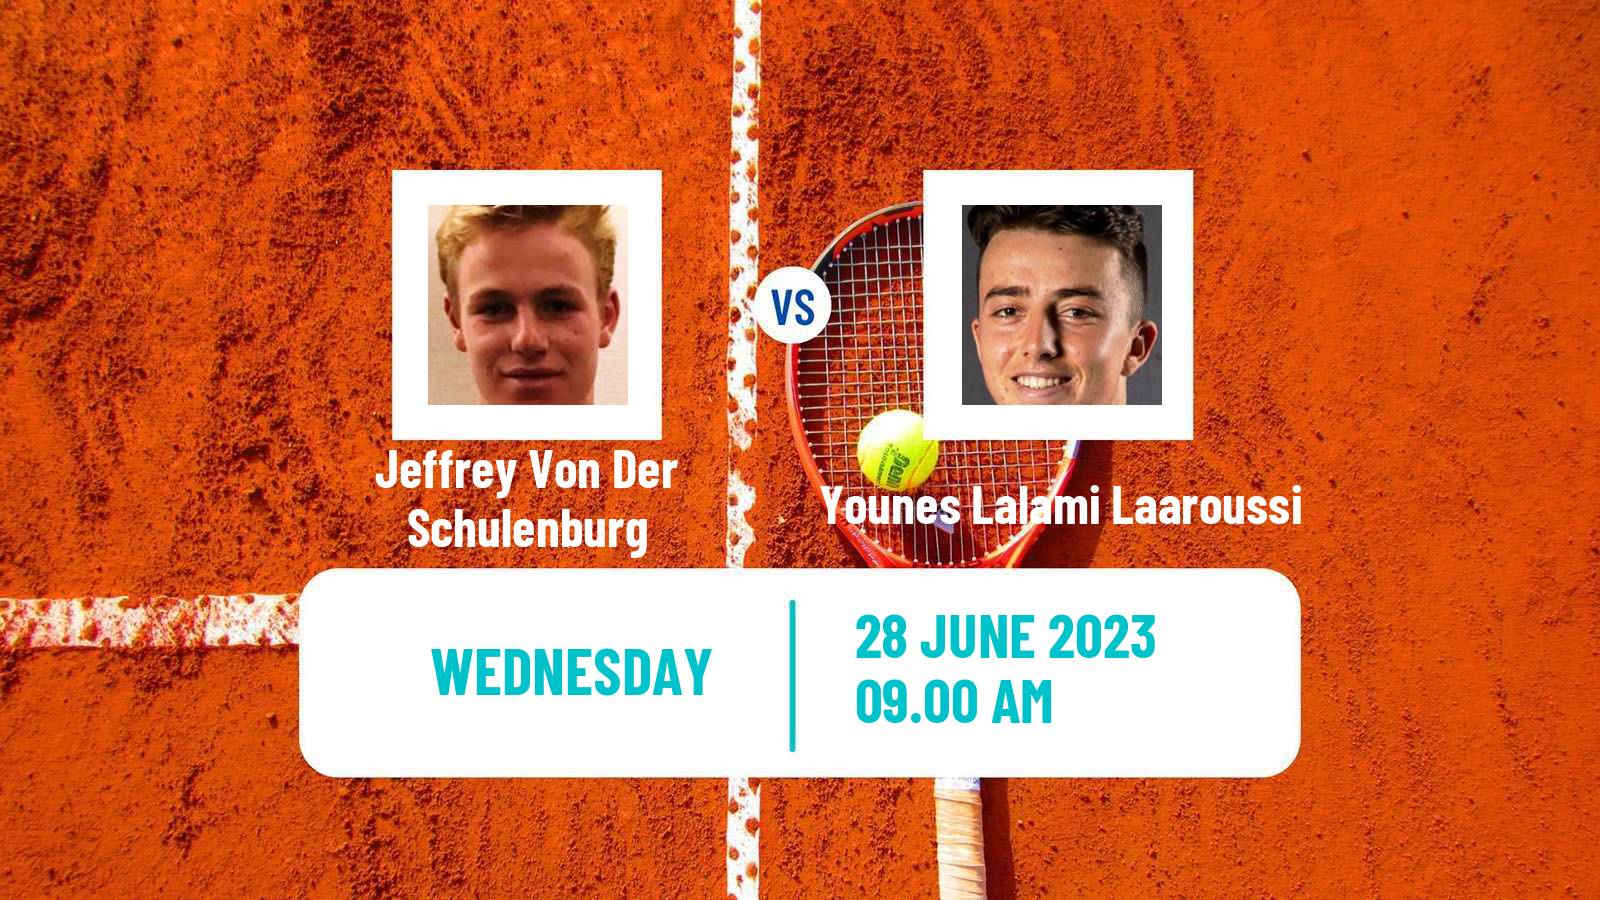 Tennis ITF M15 Alkmaar Men Jeffrey Von Der Schulenburg - Younes Lalami Laaroussi